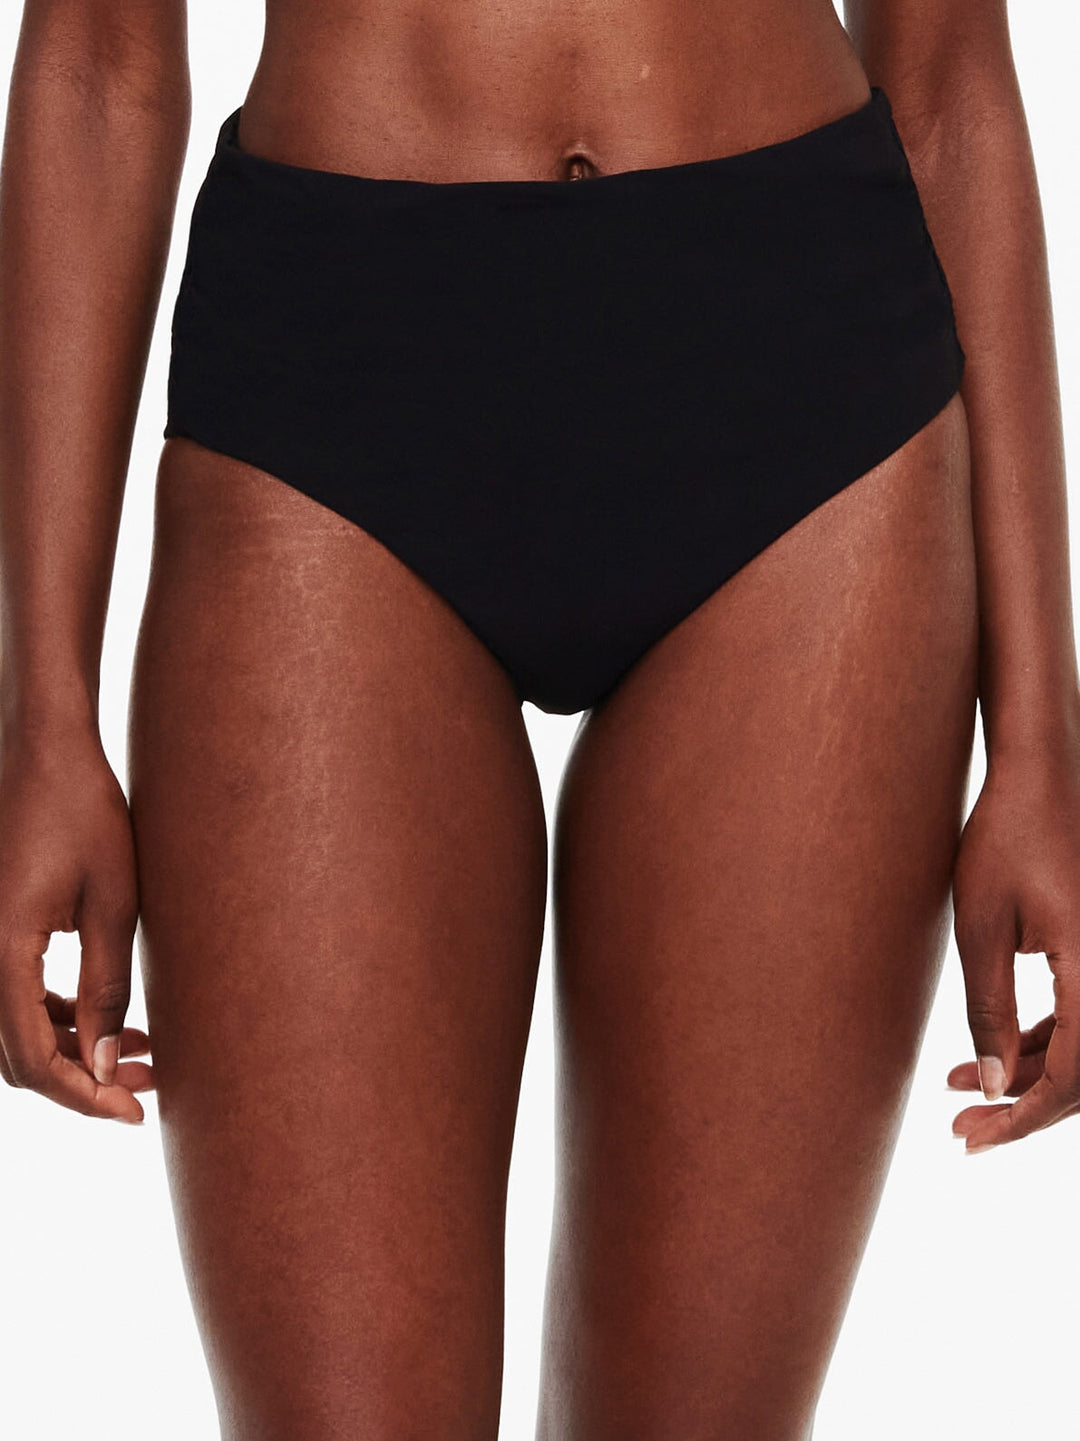 Chantelle Swimwear - Inspire Full Bikini Brief Black Full Bikini Brief Chantelle Swimwear 